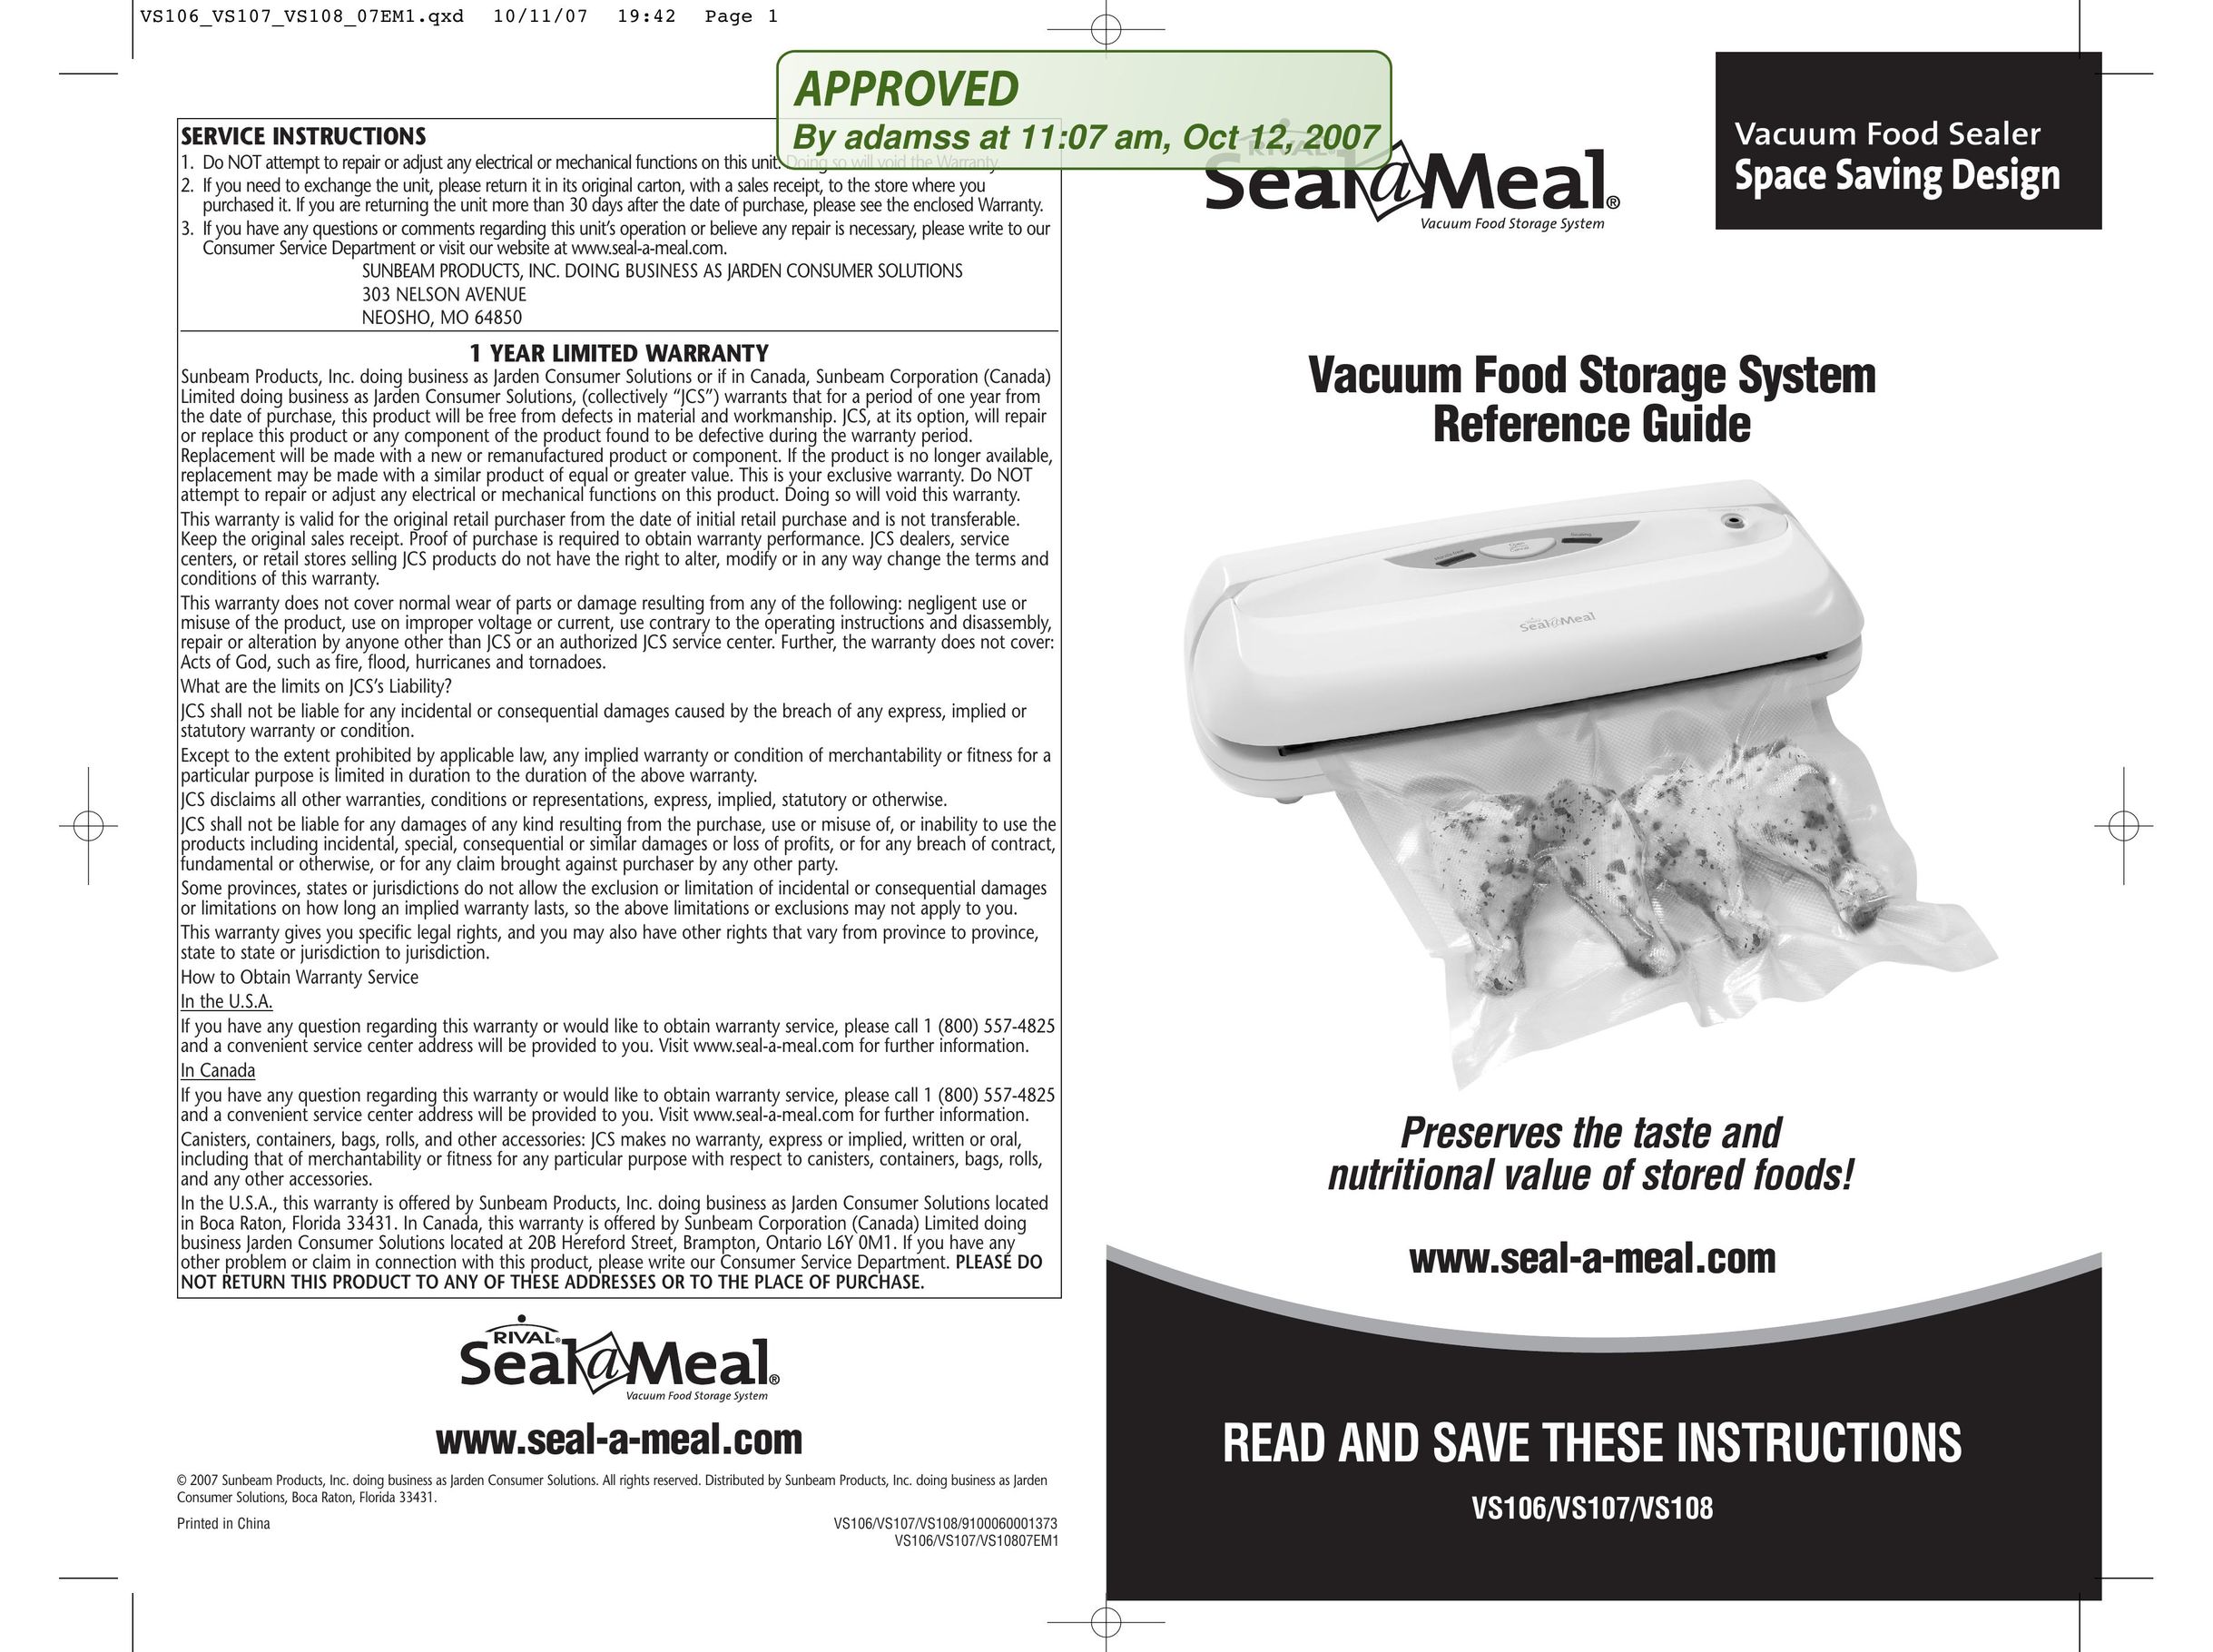 Seal-a-Meal VS107 Food Saver User Manual